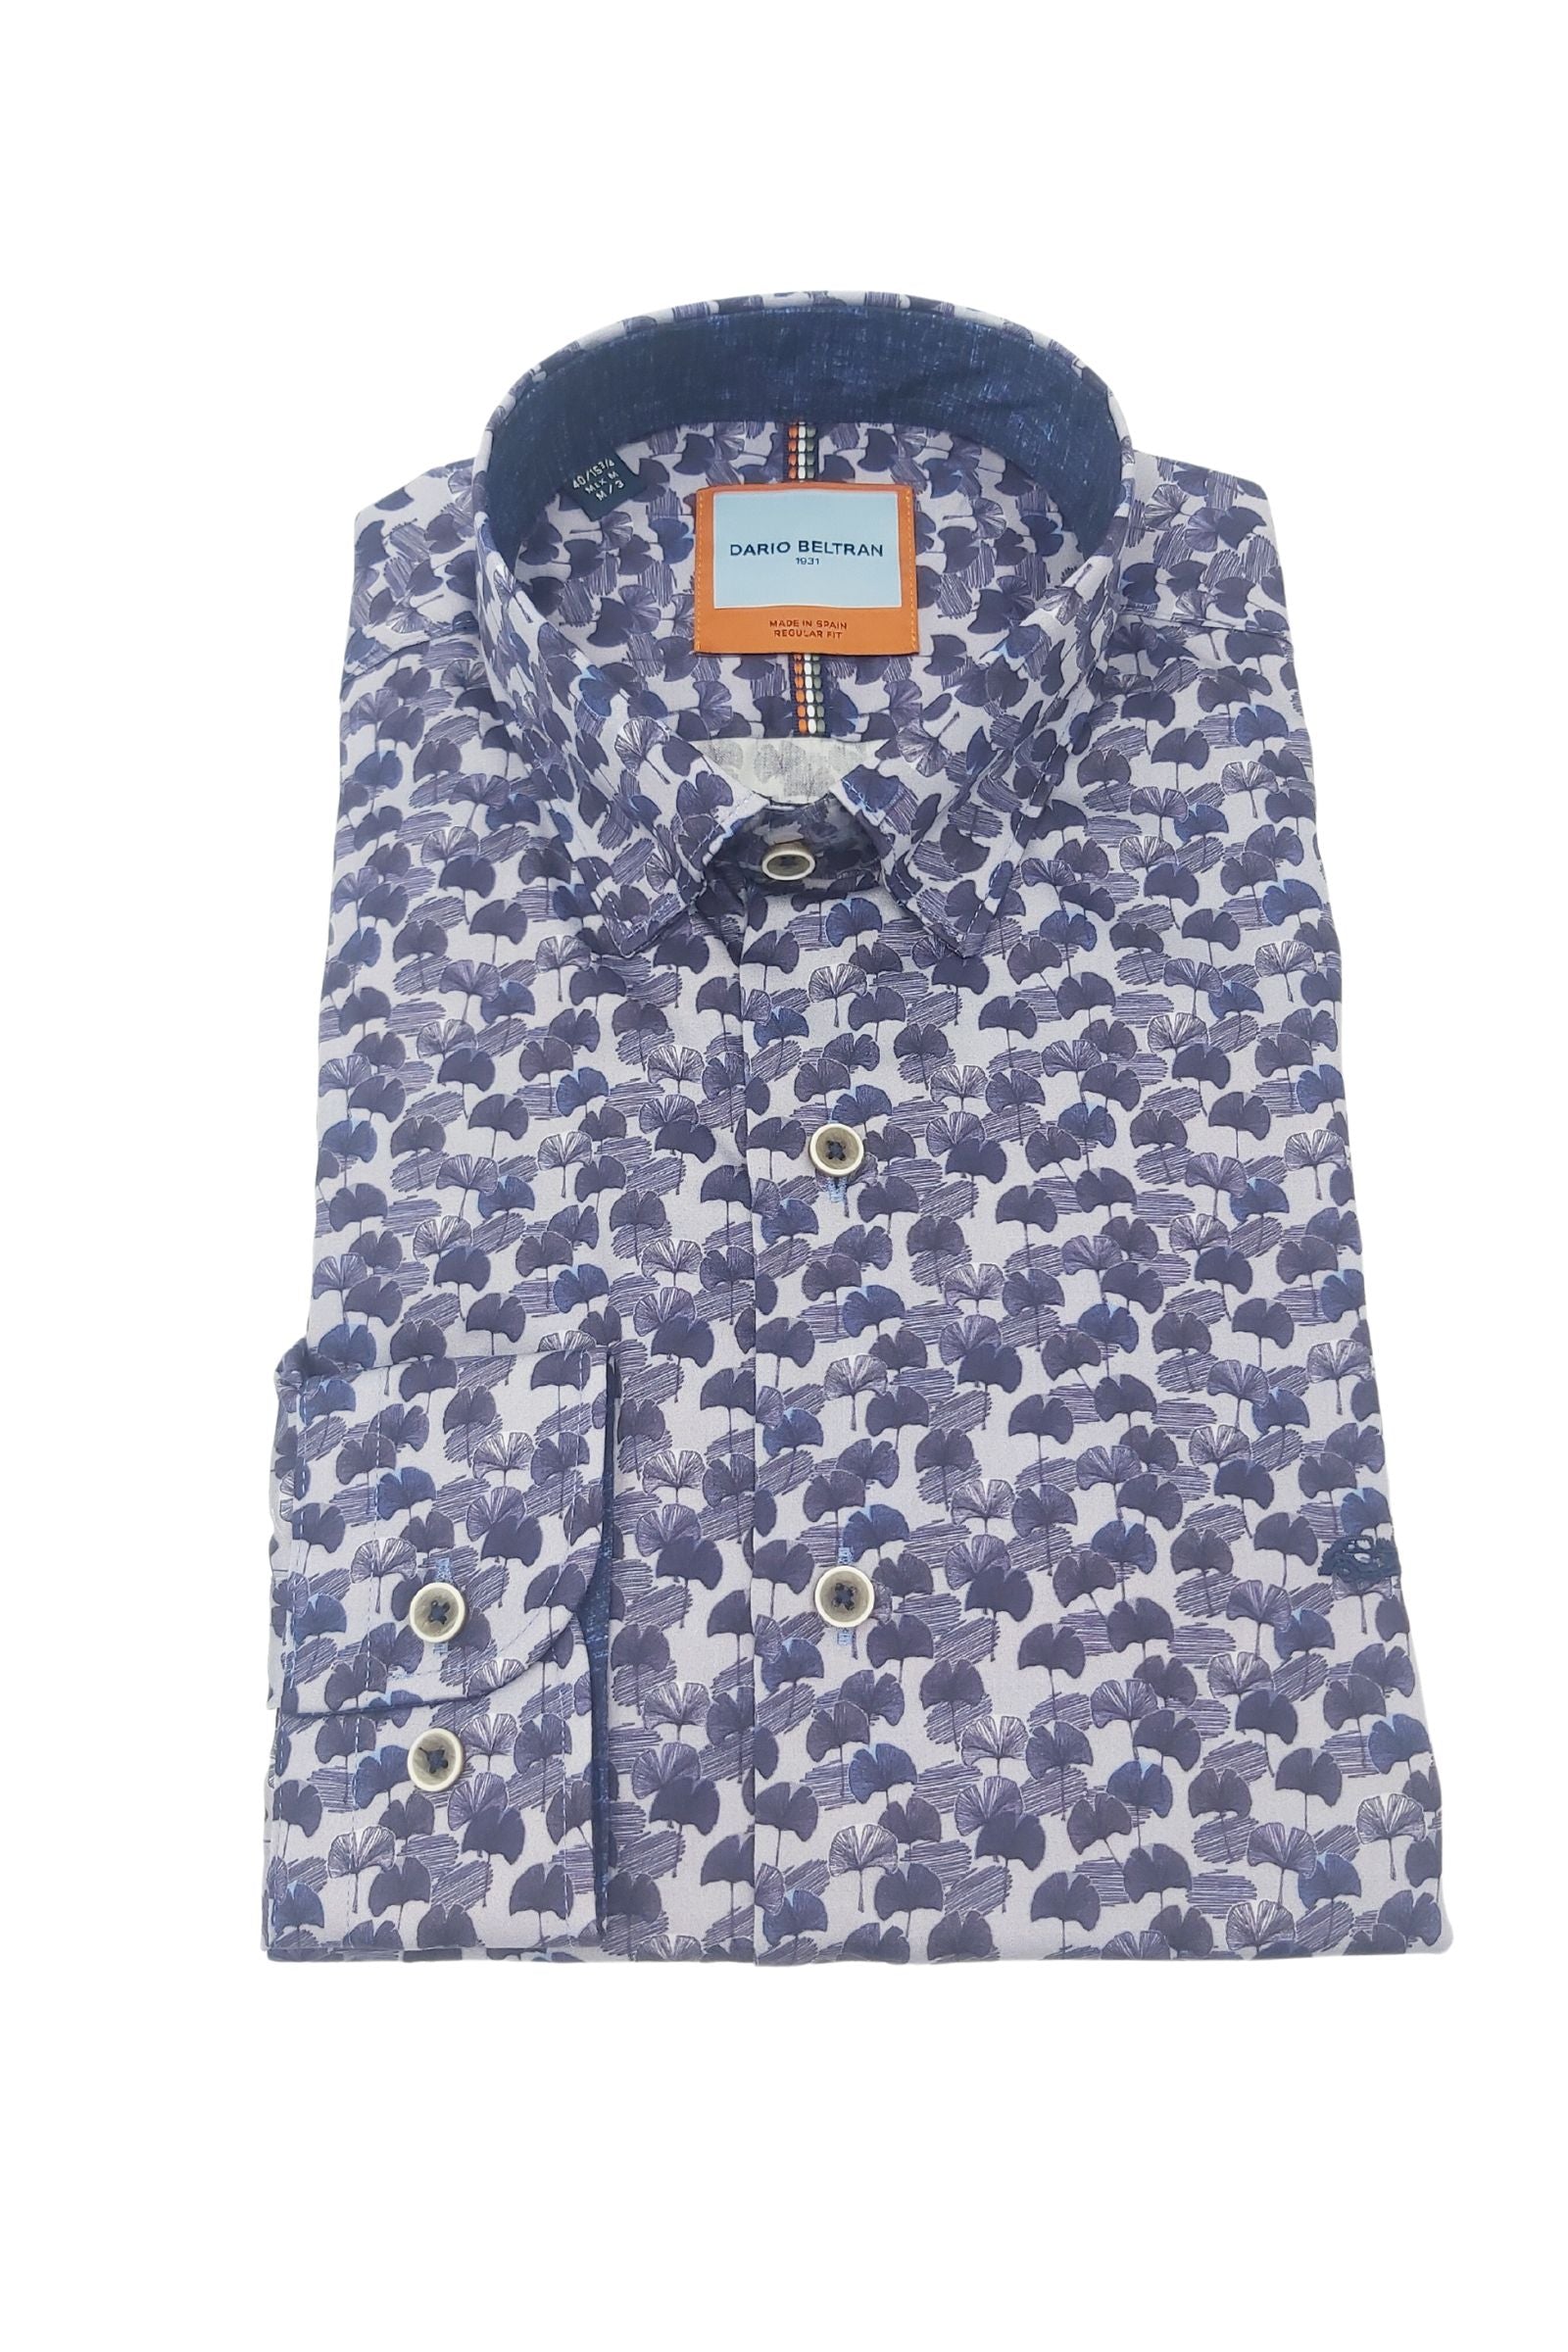 Men's Buron Purple/Lilac Leaf Pattern Shirt-Front View